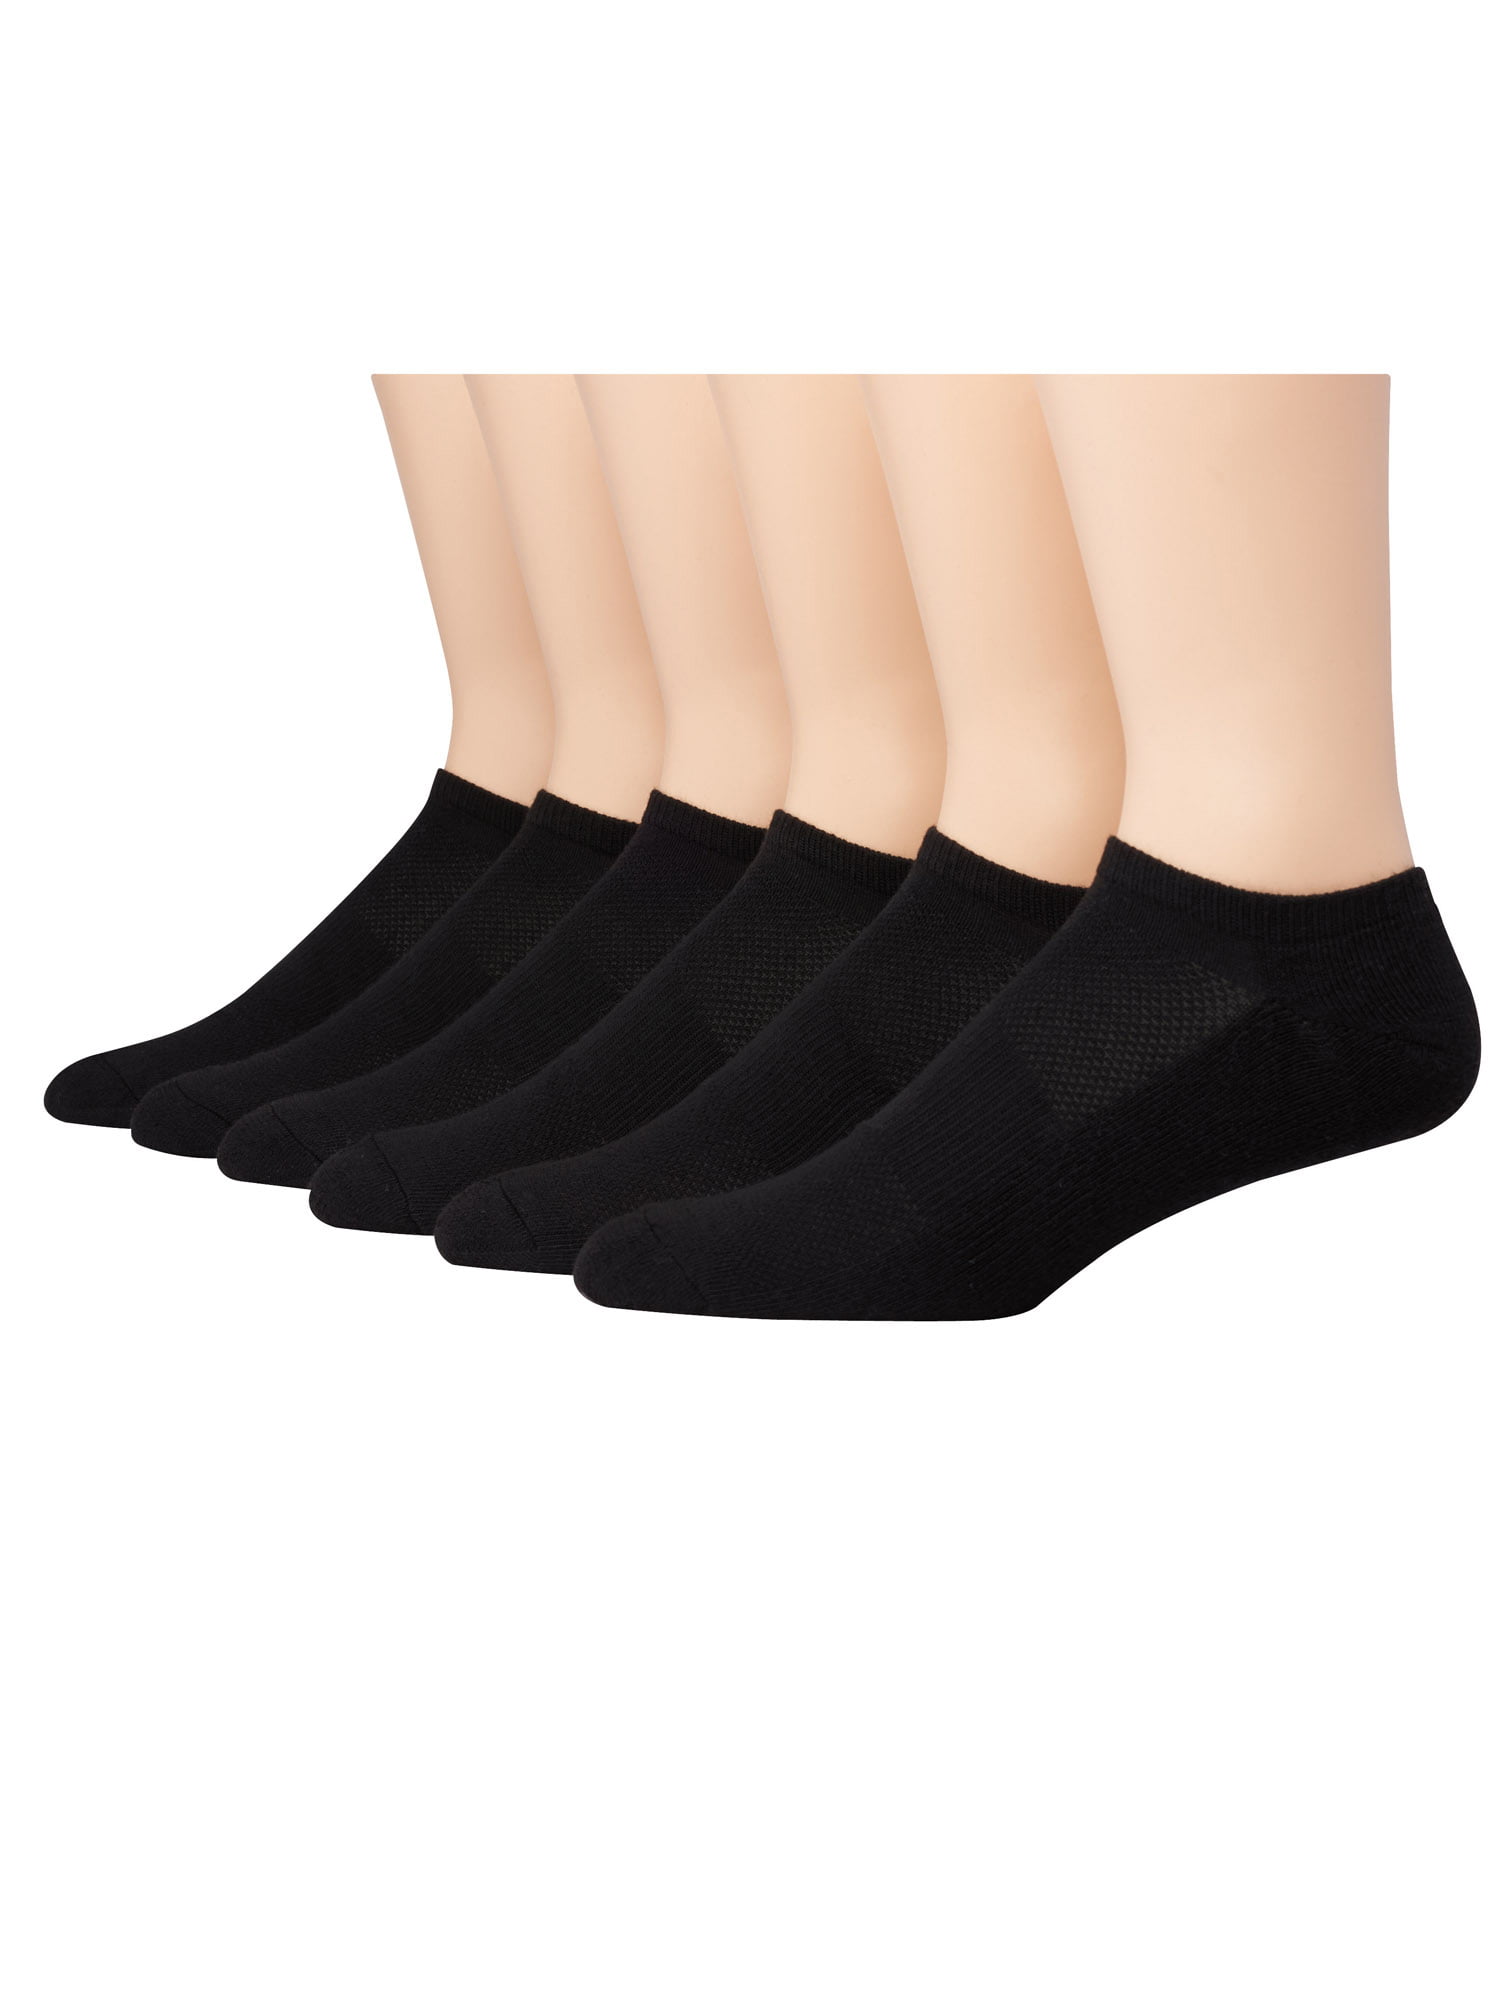 Hanes - Men's ComfortBlend Super Low No Show Socks, 6 pack - Walmart ...